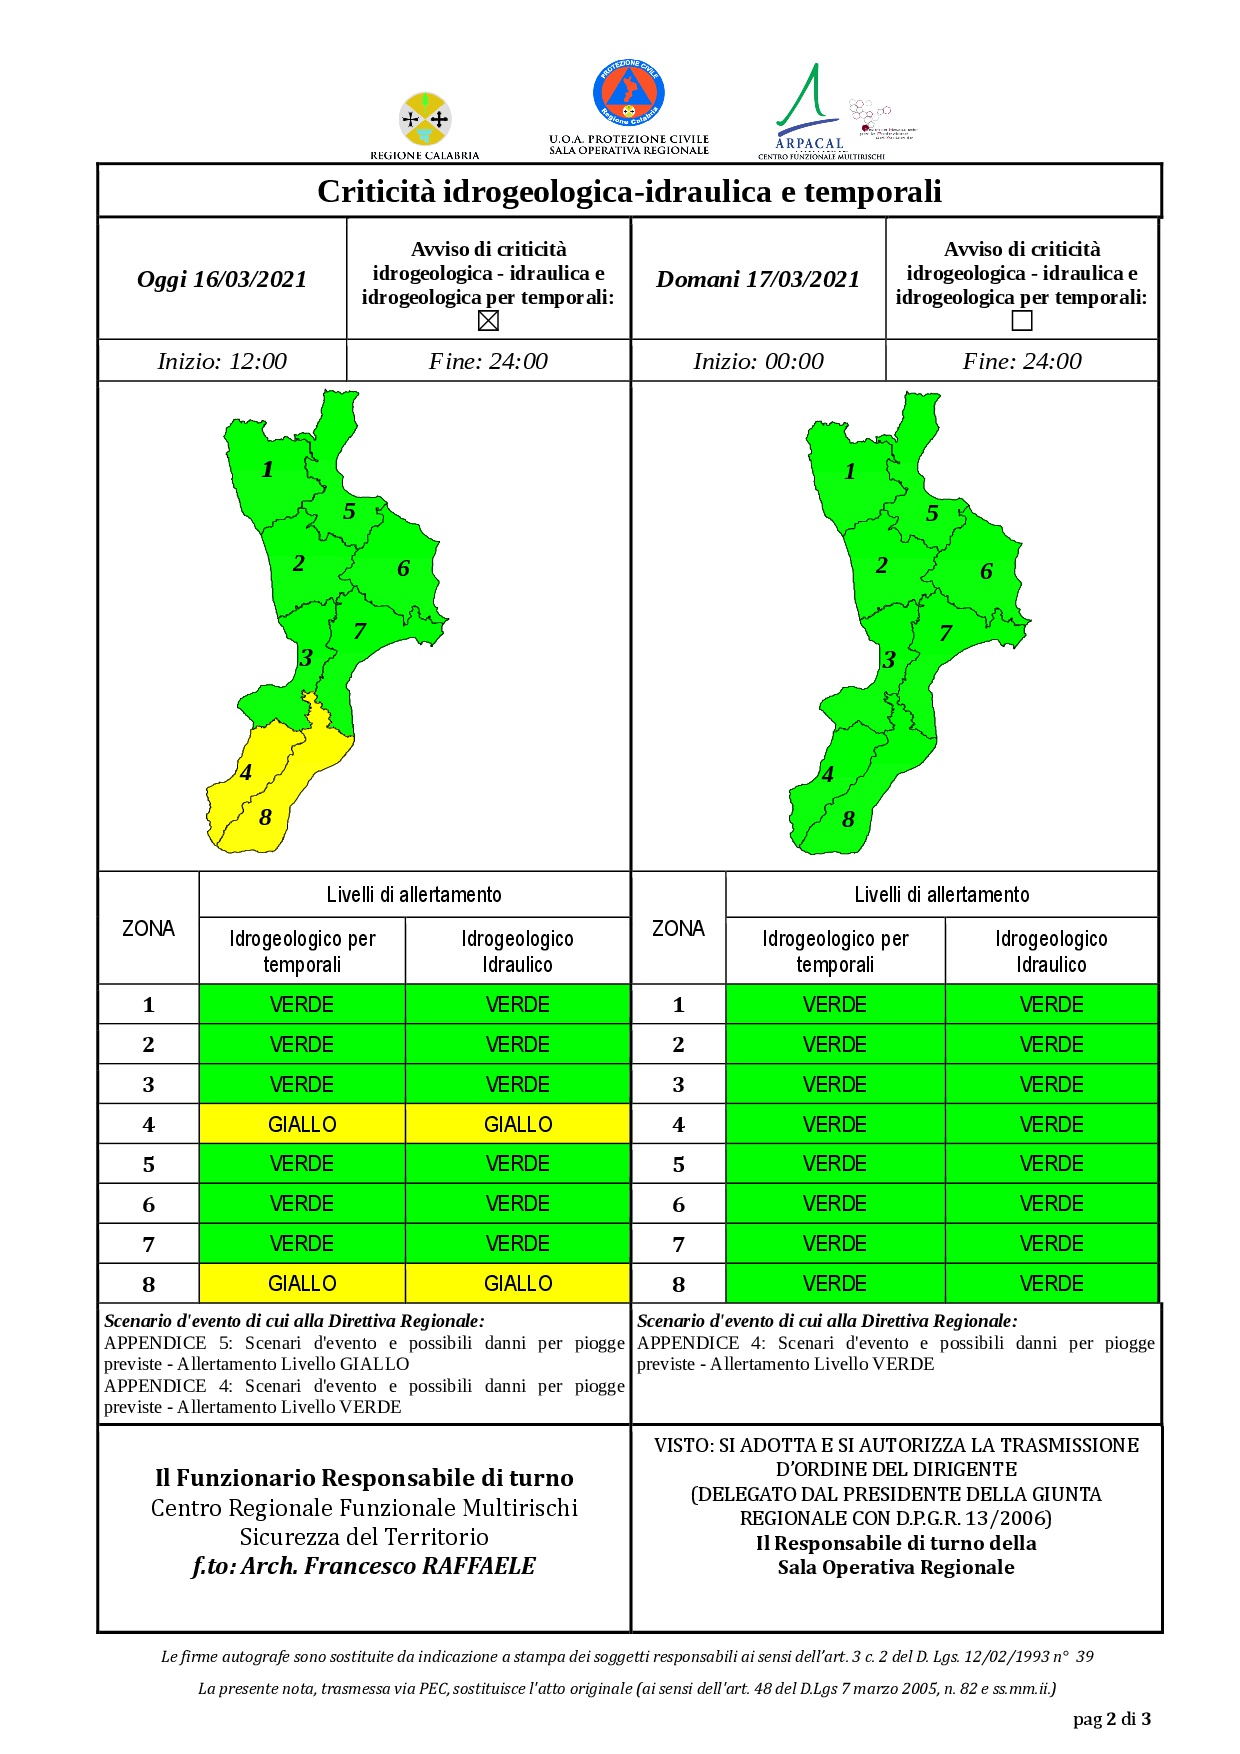 Criticità idrogeologica-idraulica e temporali in Calabria 16-03-2021